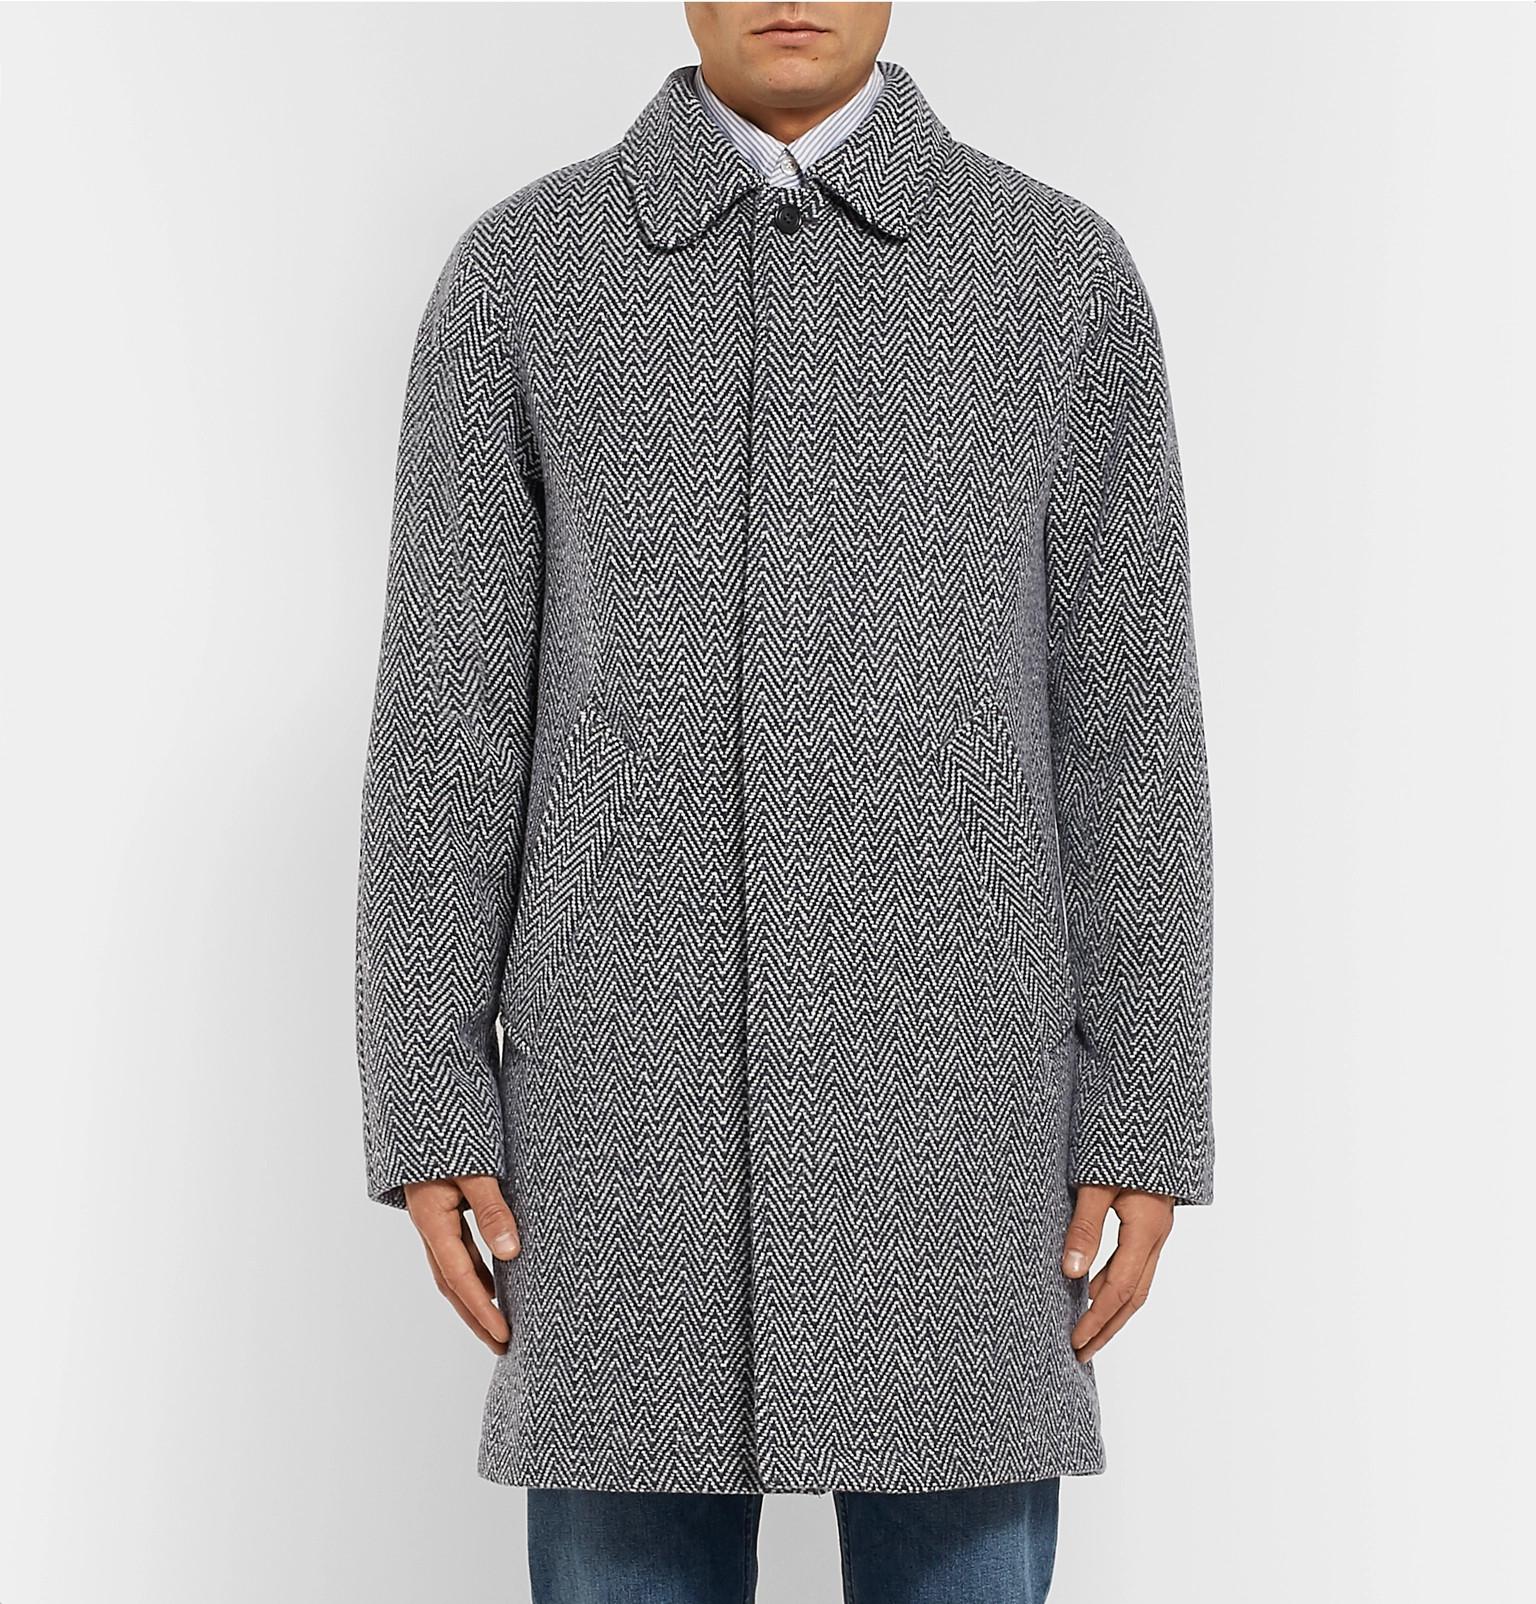 A.P.C. Ivan Herringbone Wool-blend Coat in Grey for Men - Lyst